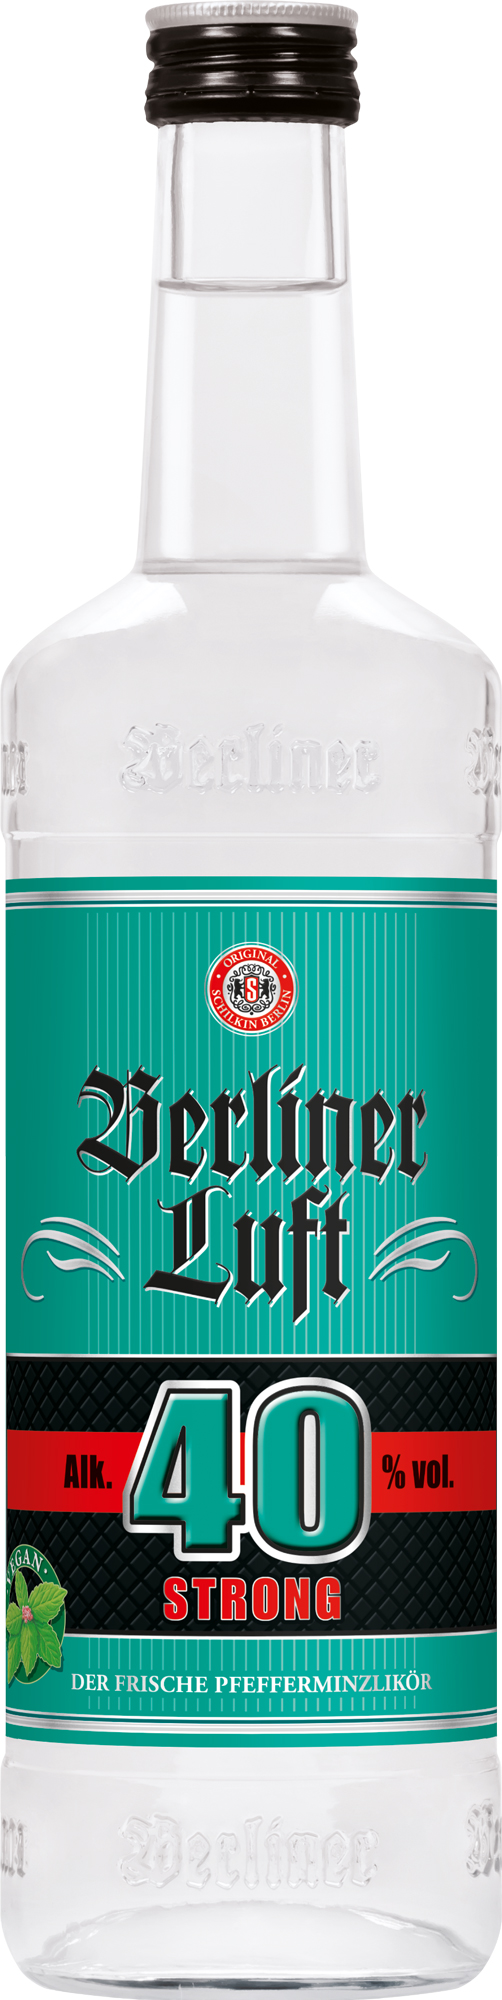 Berliner Luft - STRONG - Pfefferminzlikör 0,7l 40%vol.